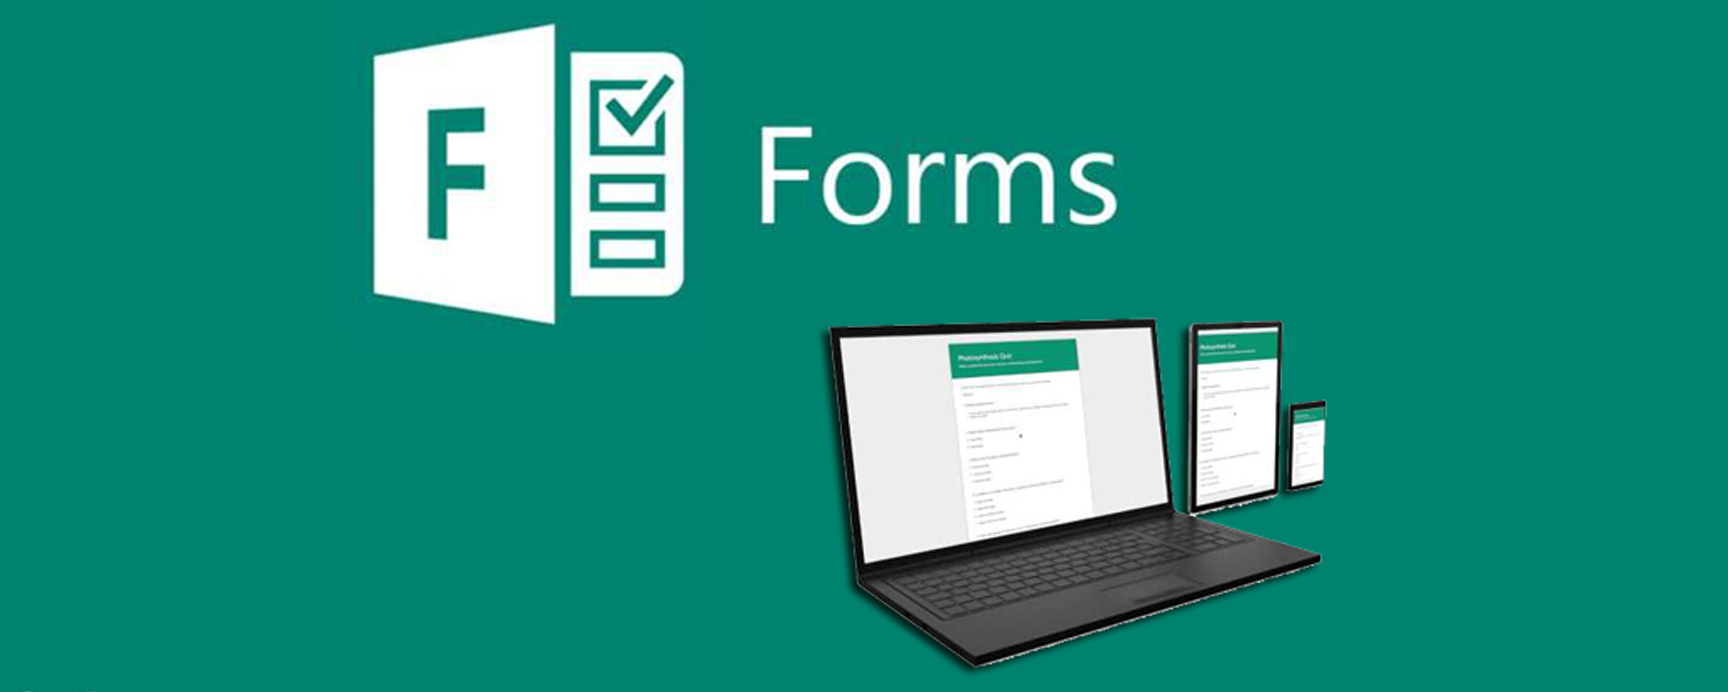 Microsoft Form